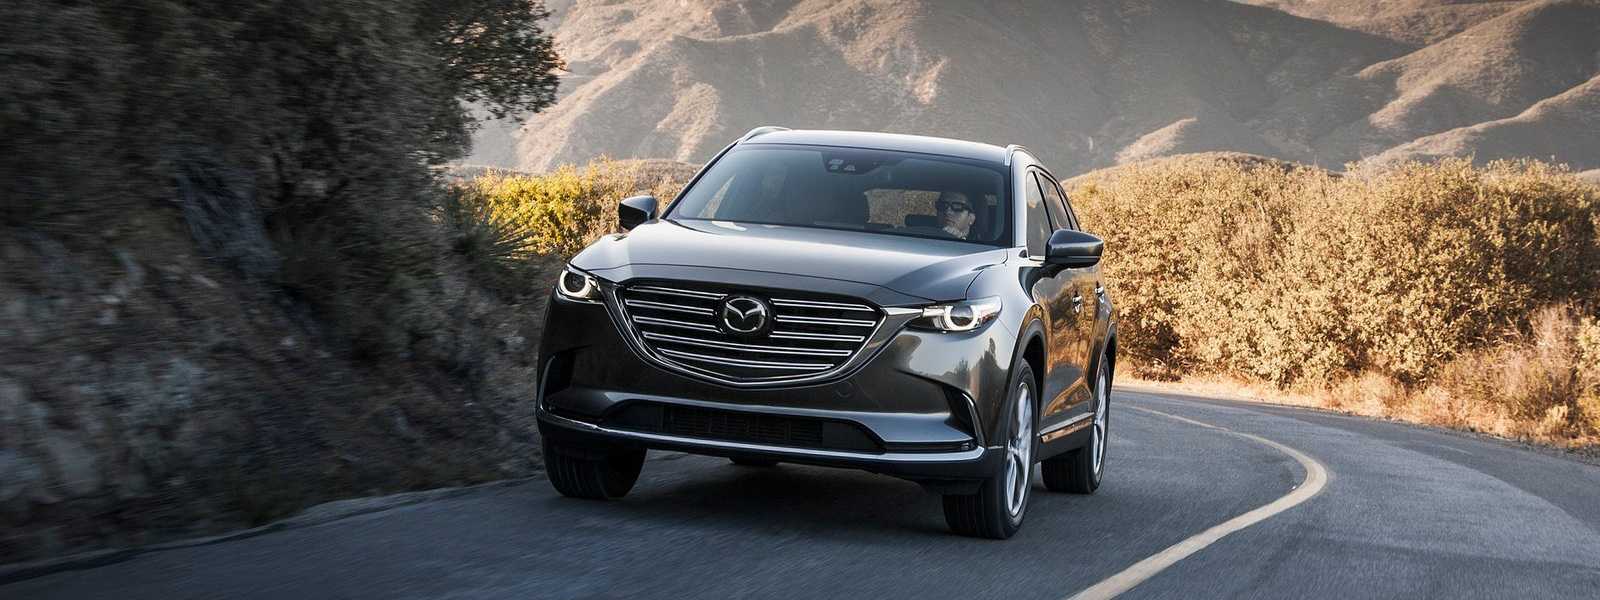 Mazda cx-3 2019 – ожидаемая новинка японского производителя